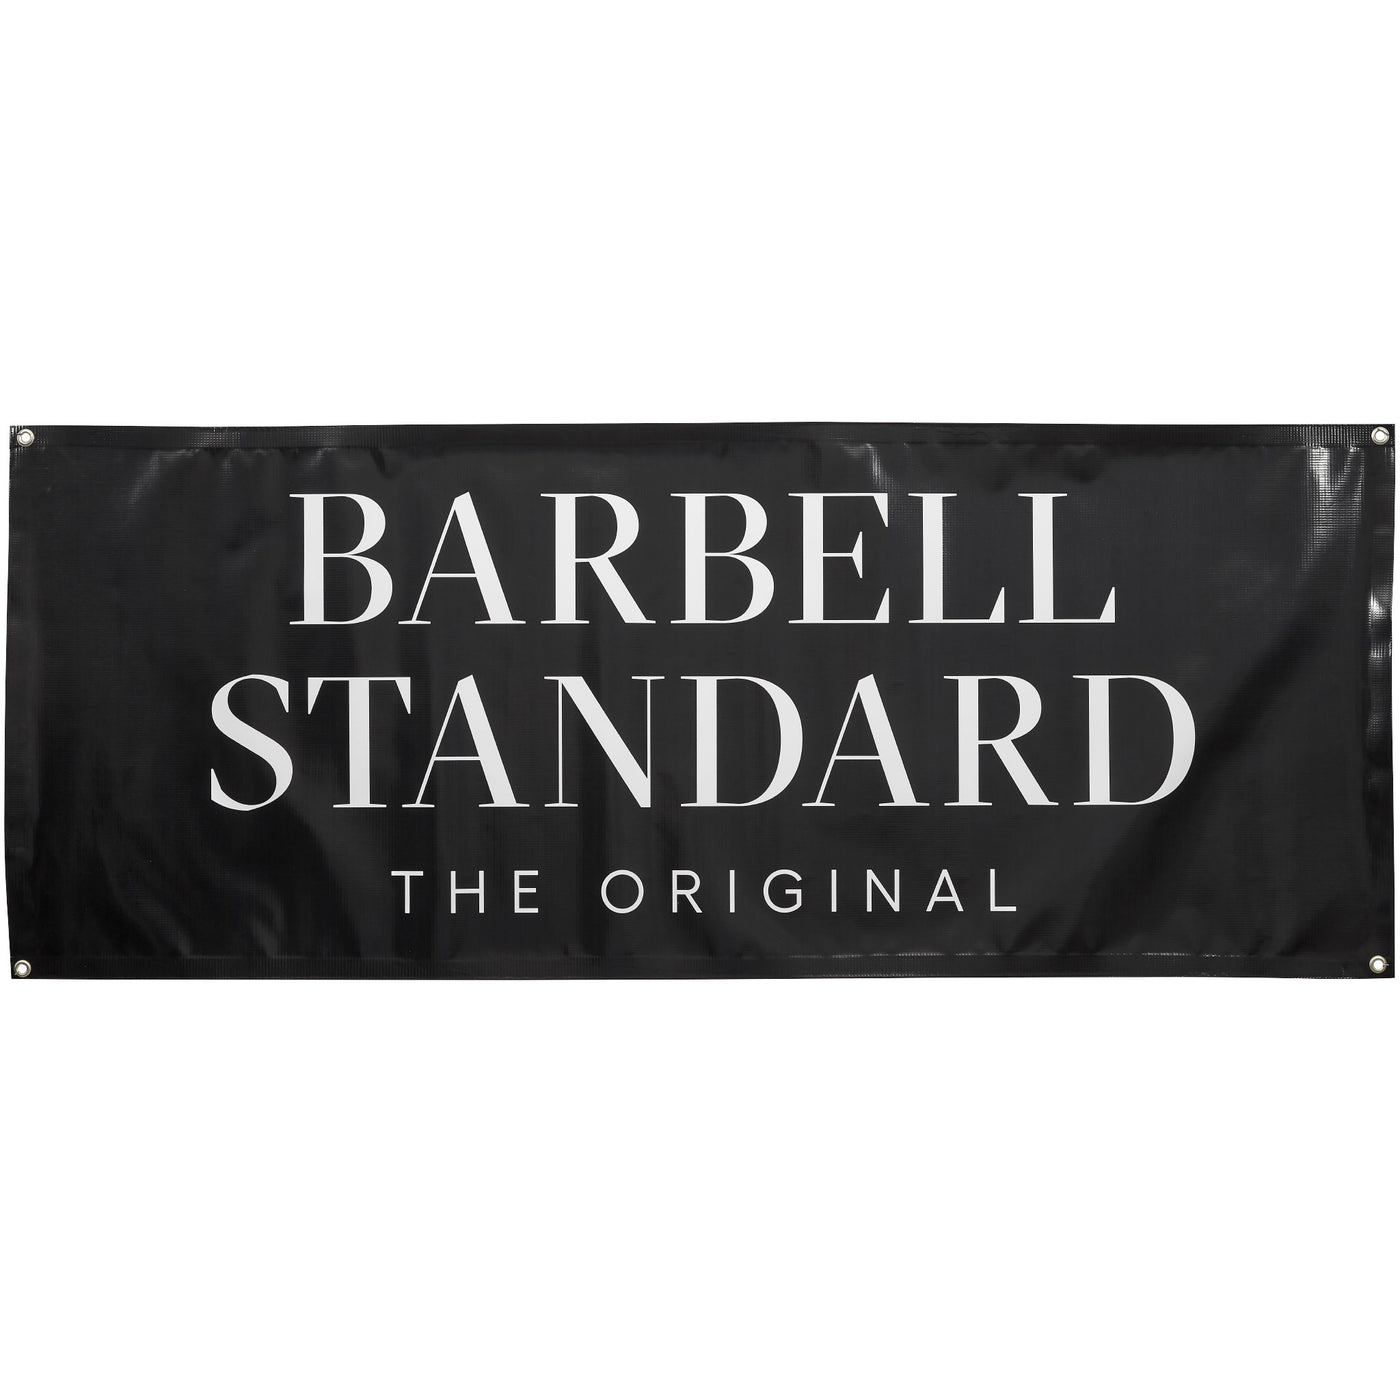 Gym Banner 2' x 5' Barbell Standard